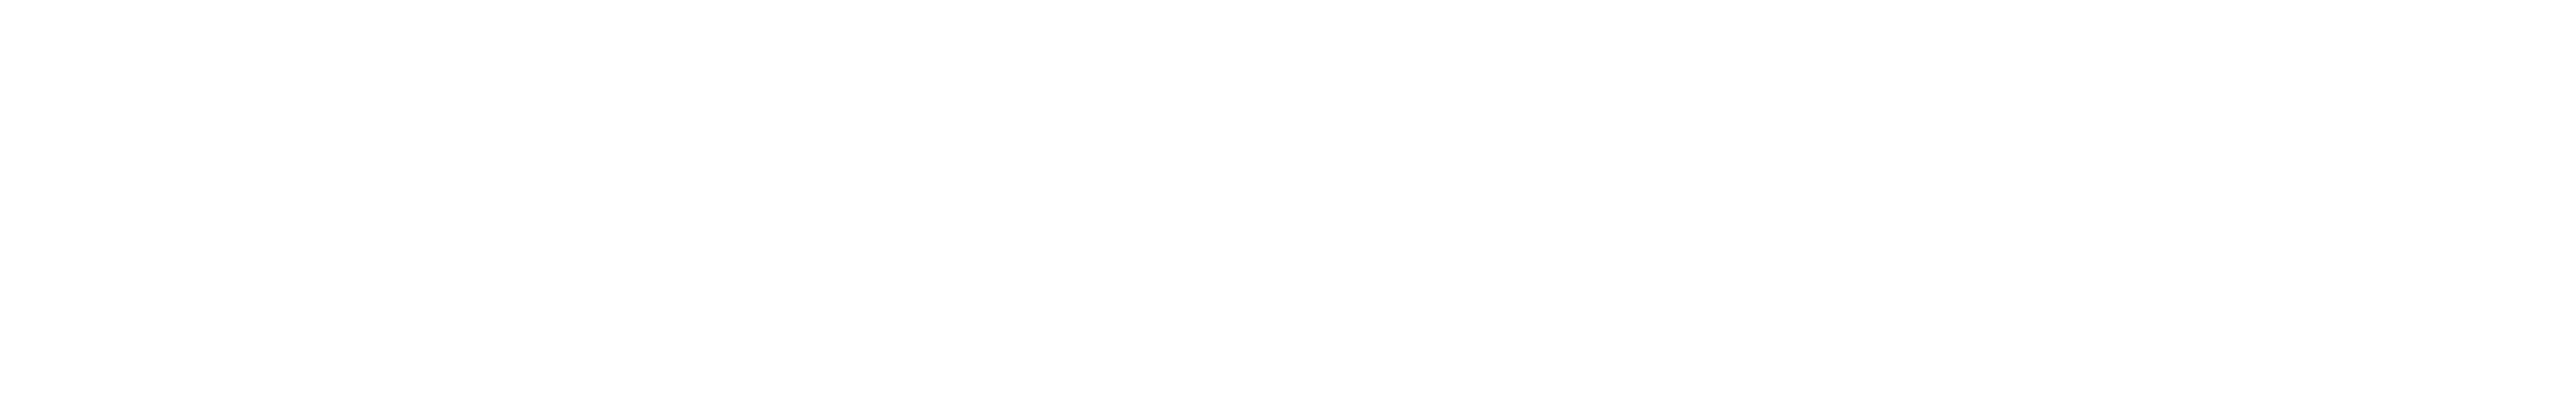 Barnes Wealth Management Group